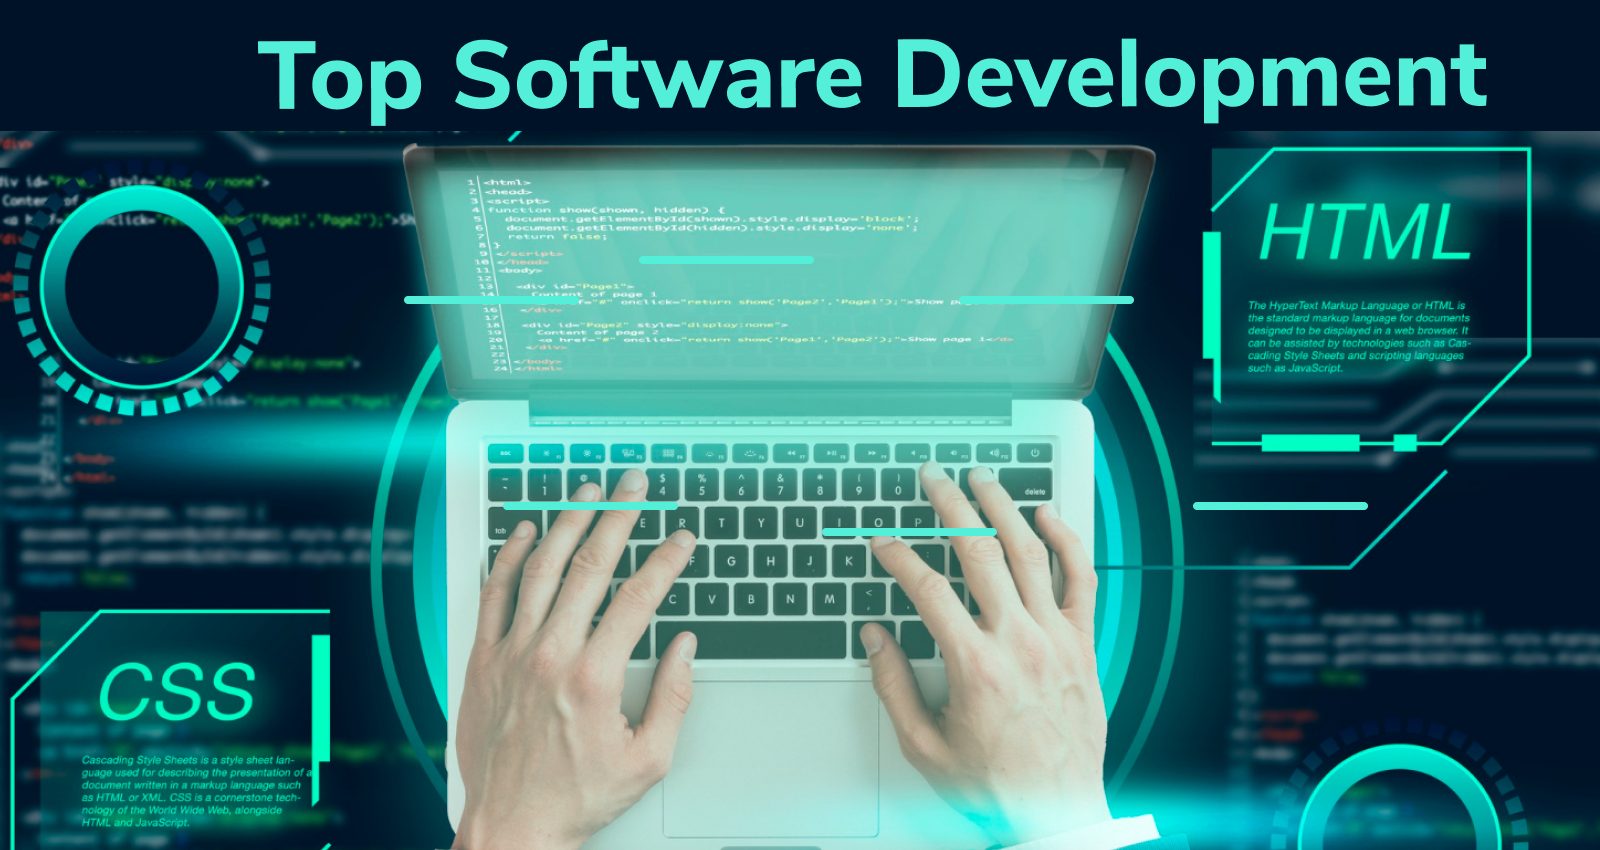 Top 10 Software Development Trends in 2023, AR & VR, IoT, Blockchain, Python, JavaScript, Microservices